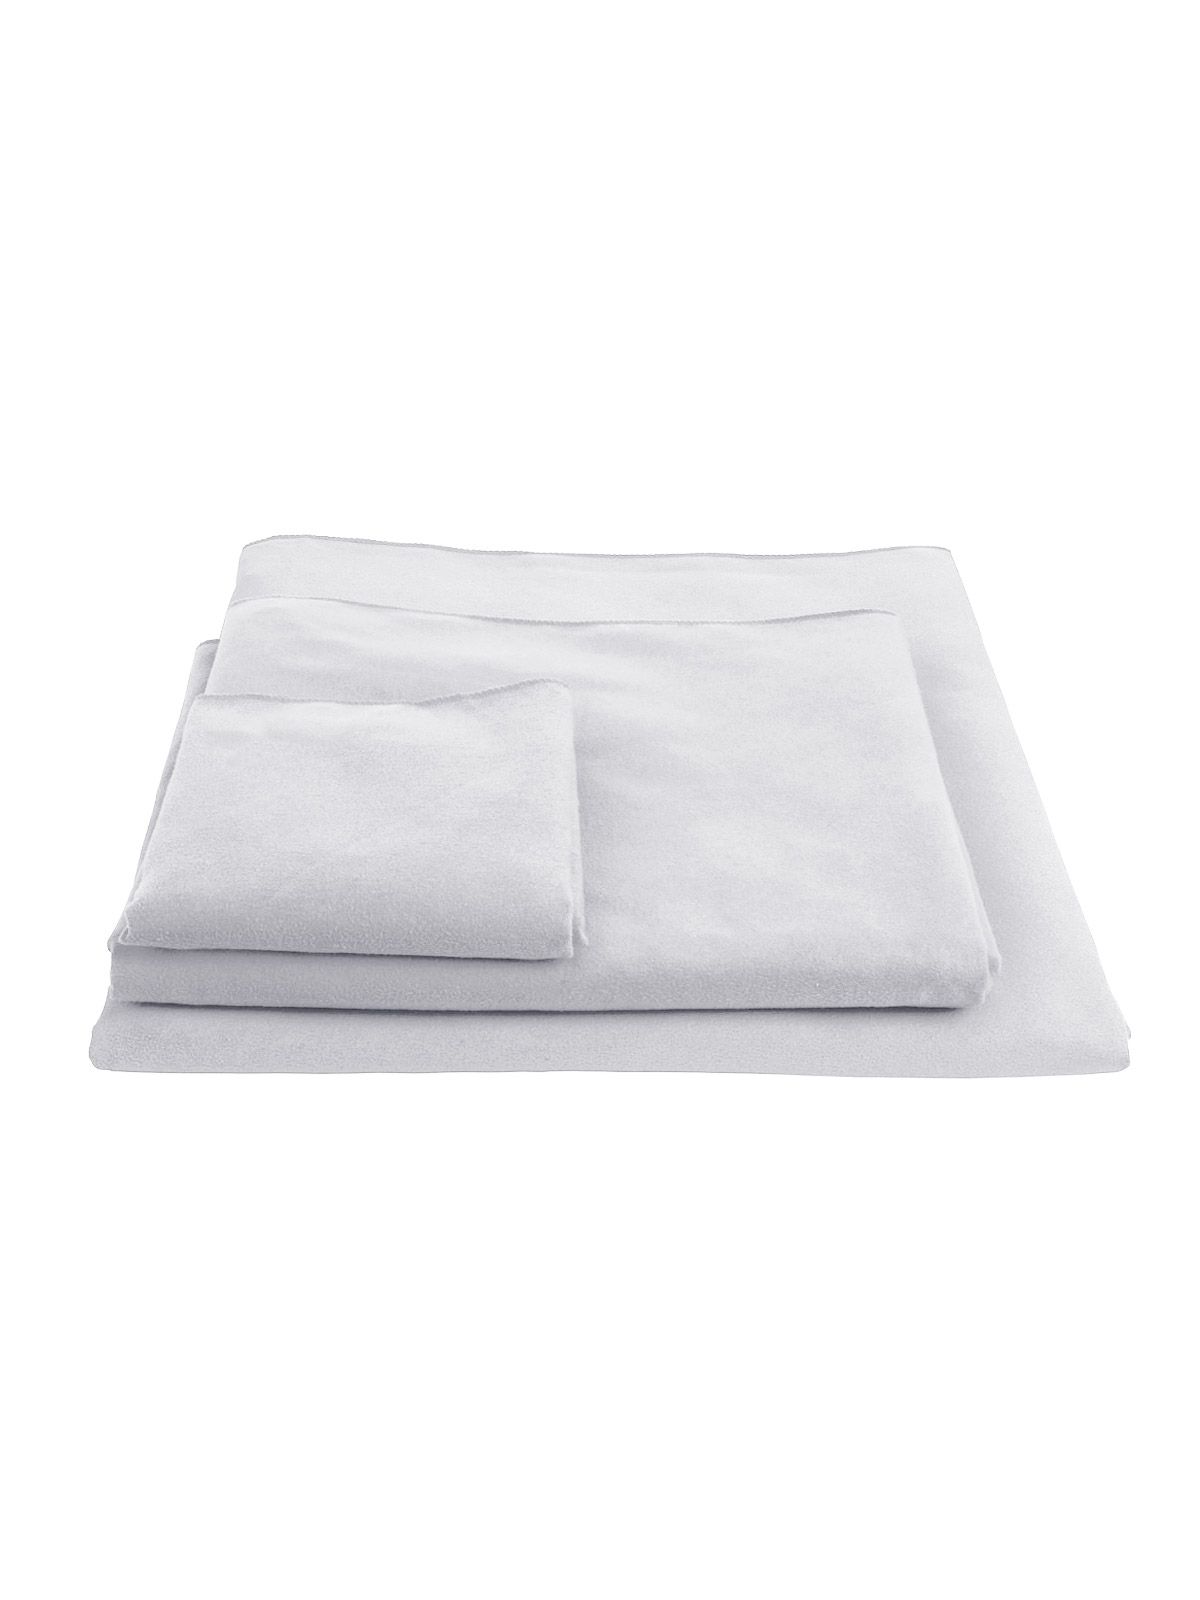 promo-towel-90x170-white.webp